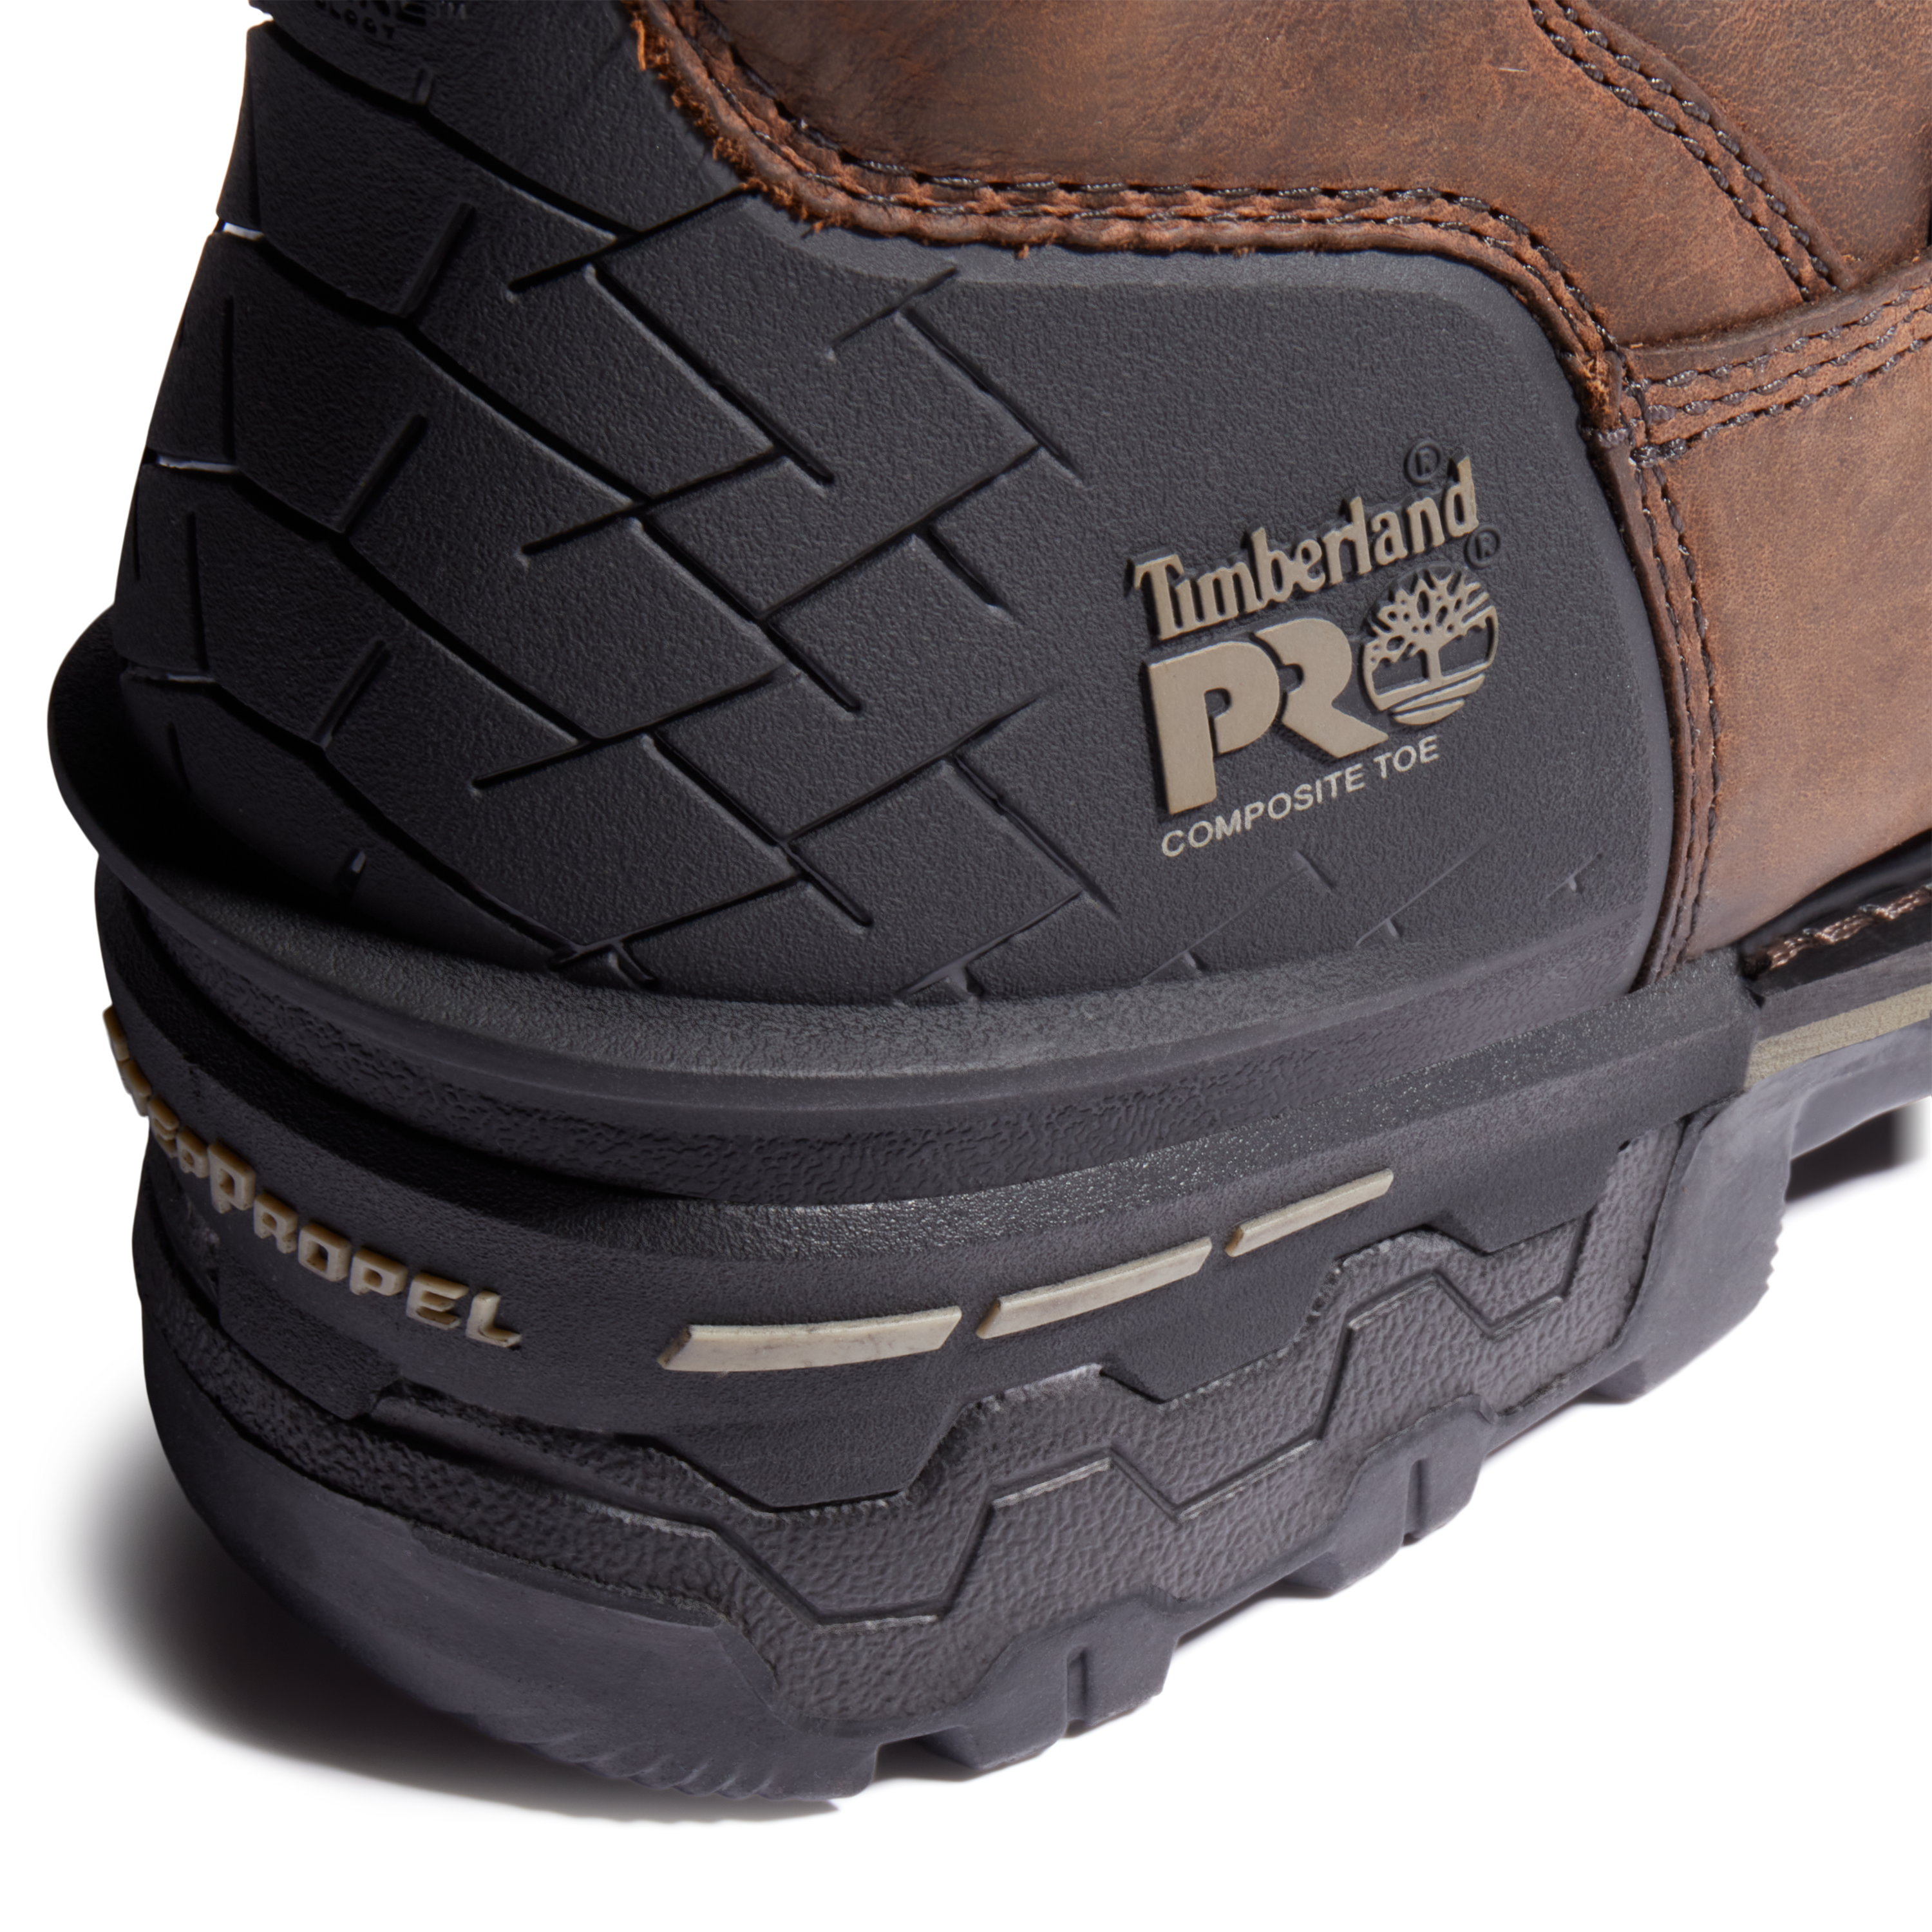 Timberland Pro Boondock HD 6" Composite Toe / Waterproof - Wide - Mens